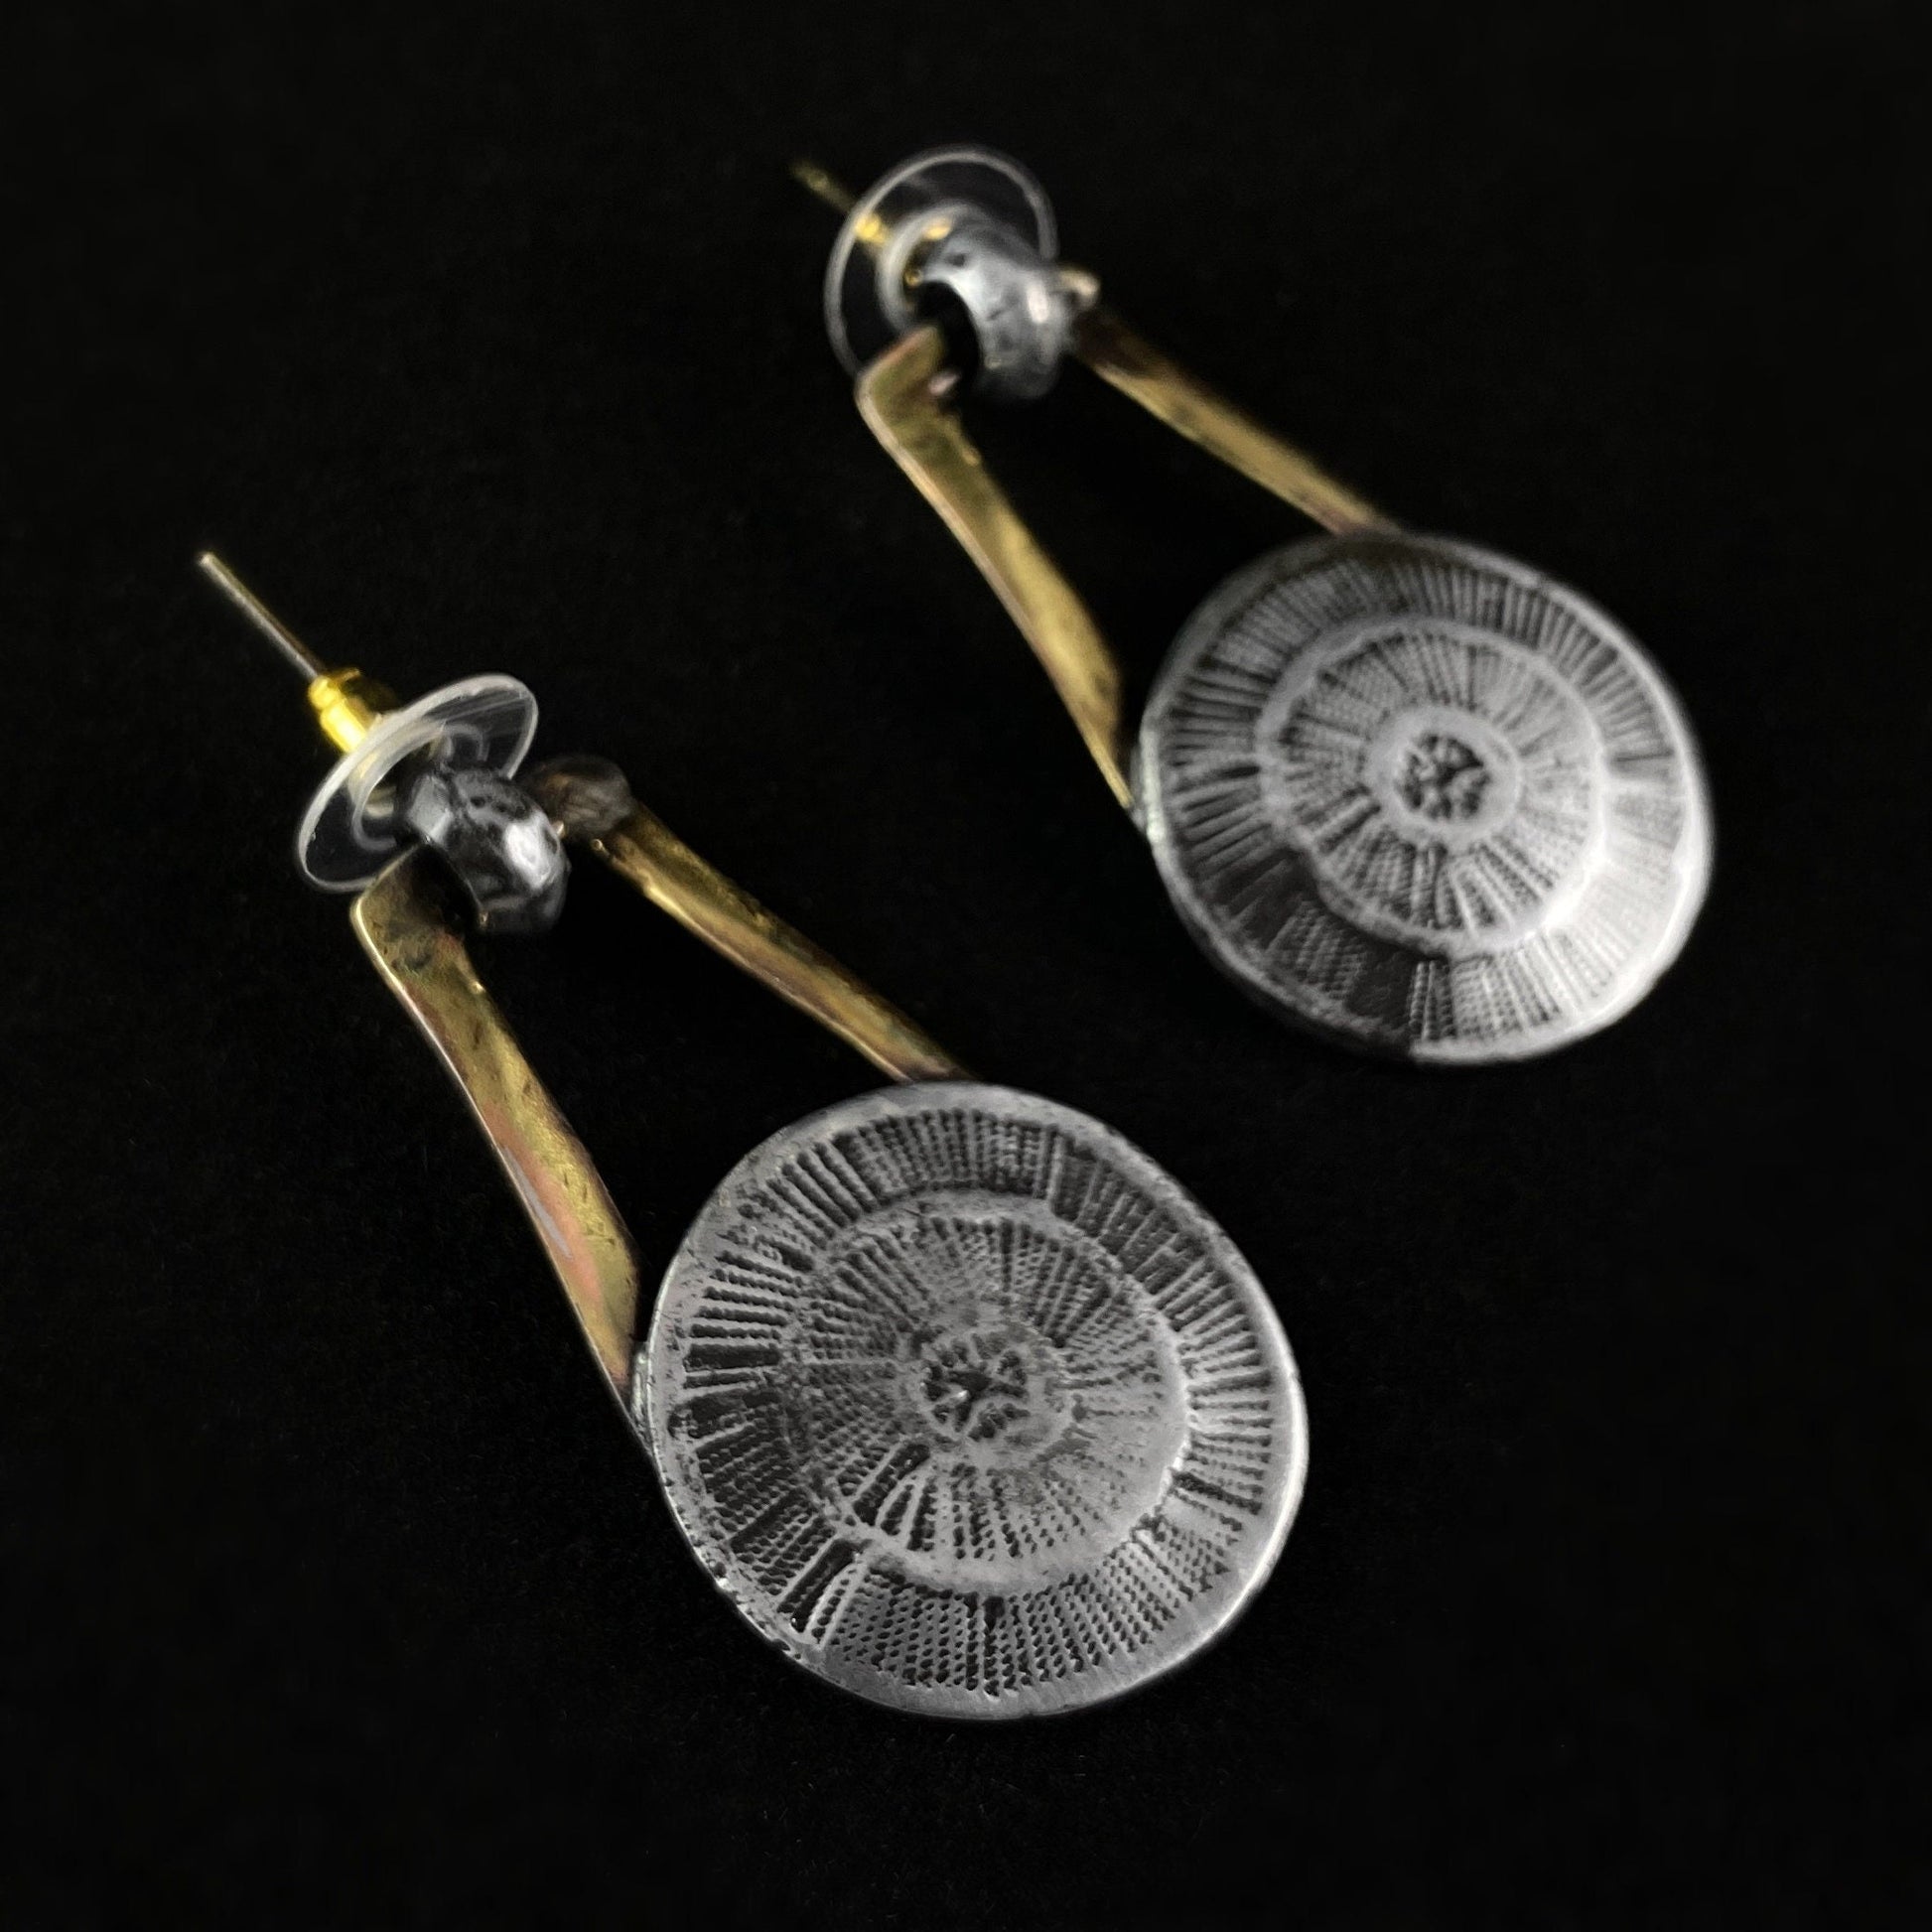 Chunky Gold and Silver Medallion Drop Earrings, Handmade, Nickel Free - Elegant Minimalist Jewelry for Women